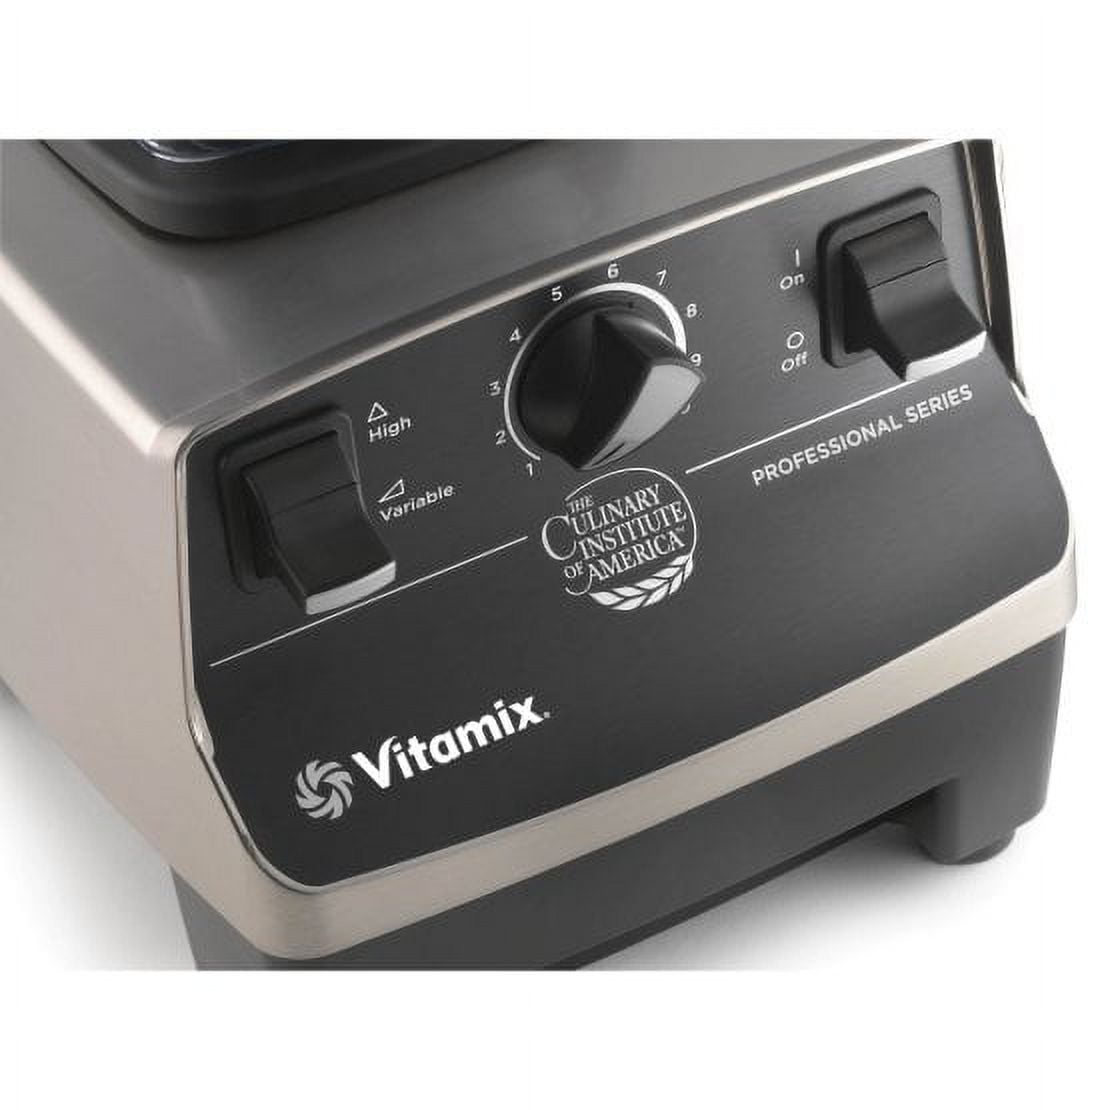 Vitamix Professional Series blender… $6. : r/ThriftStoreHauls